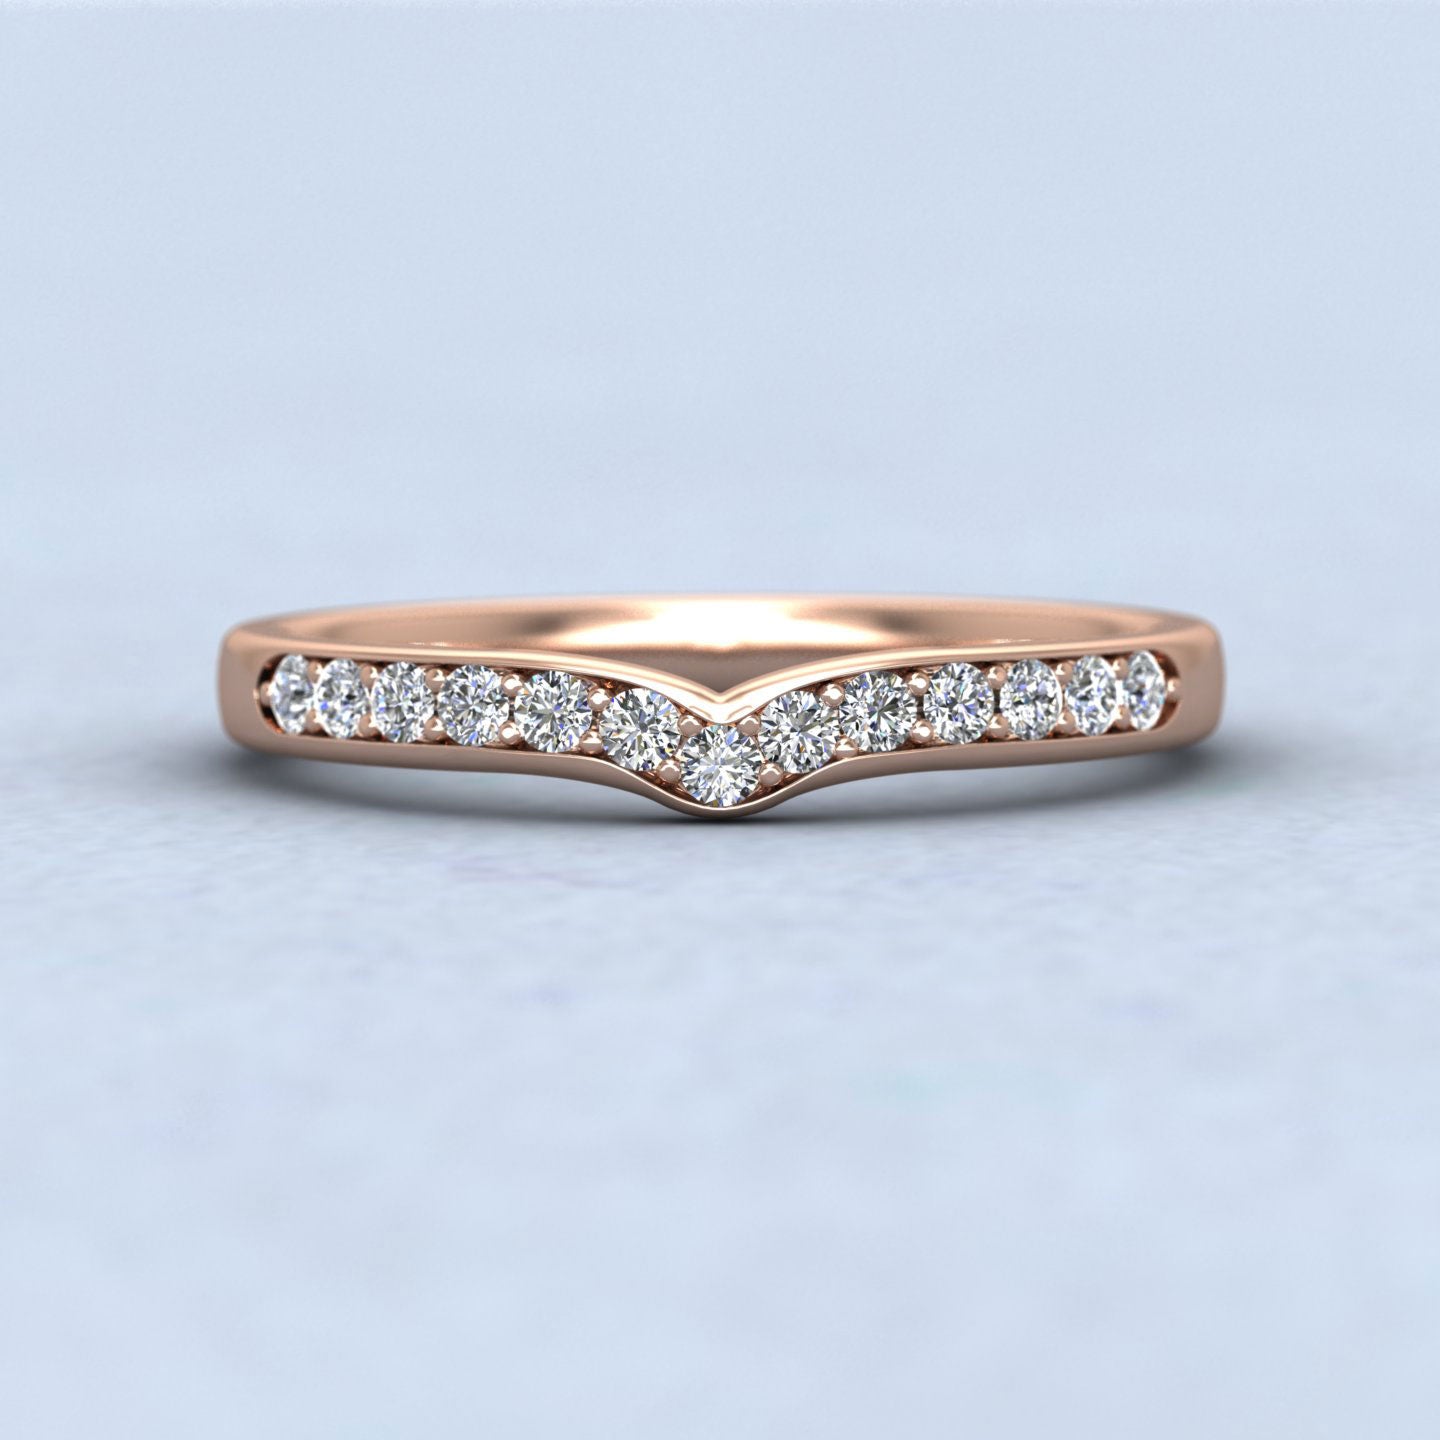 Slight Wishbone Shaped Bead Set Diamond Wedding Ring In 18ct Rose Gold 2.25mm Wide